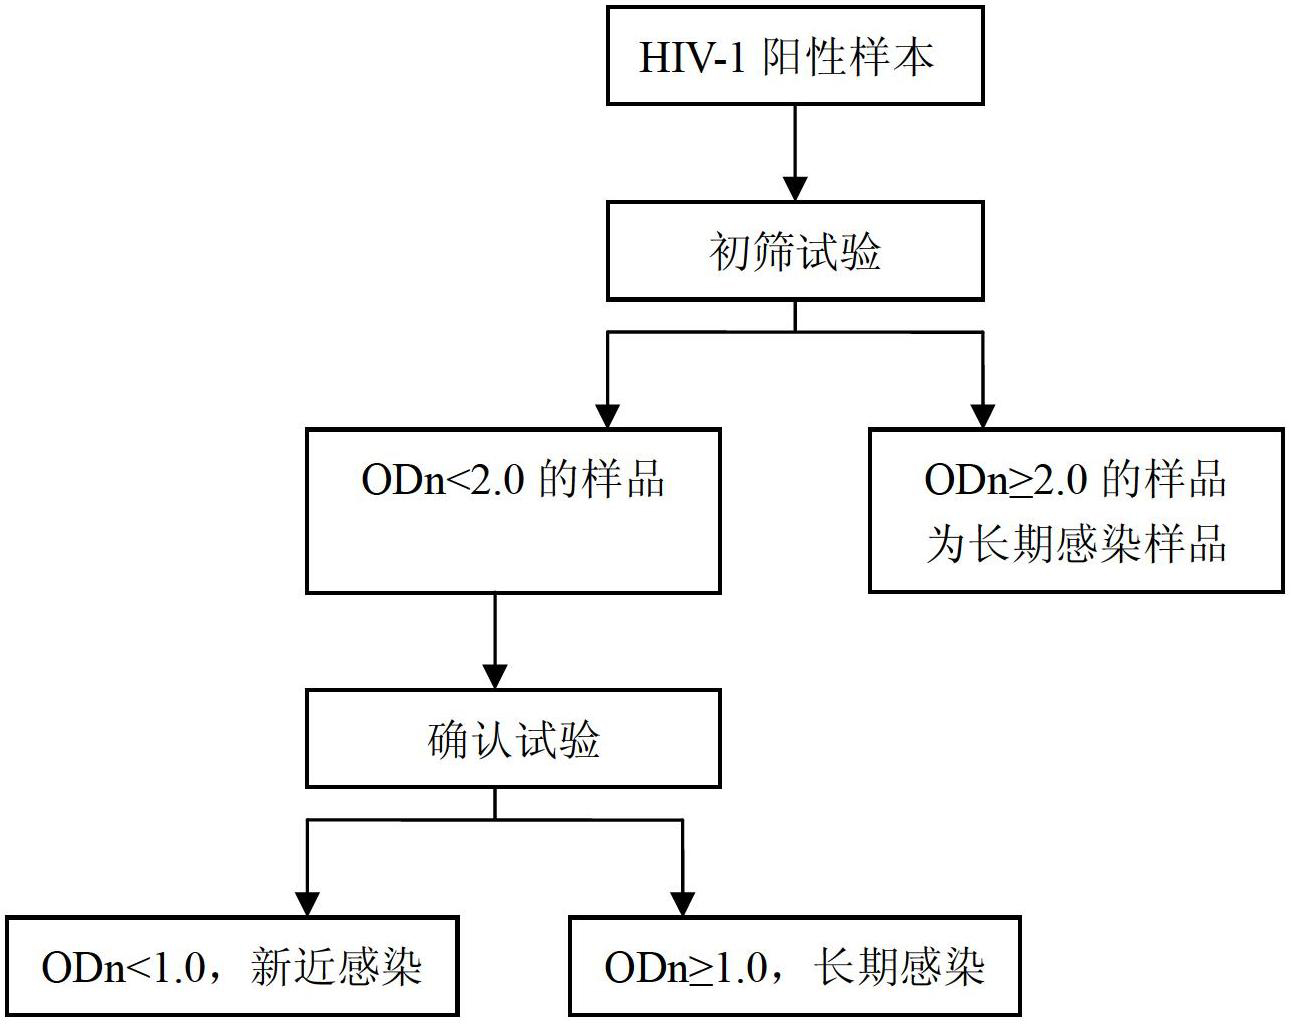 Novel I-type human immunodeficiency virus (HIV-1) infection enzyme test-free reagent kit